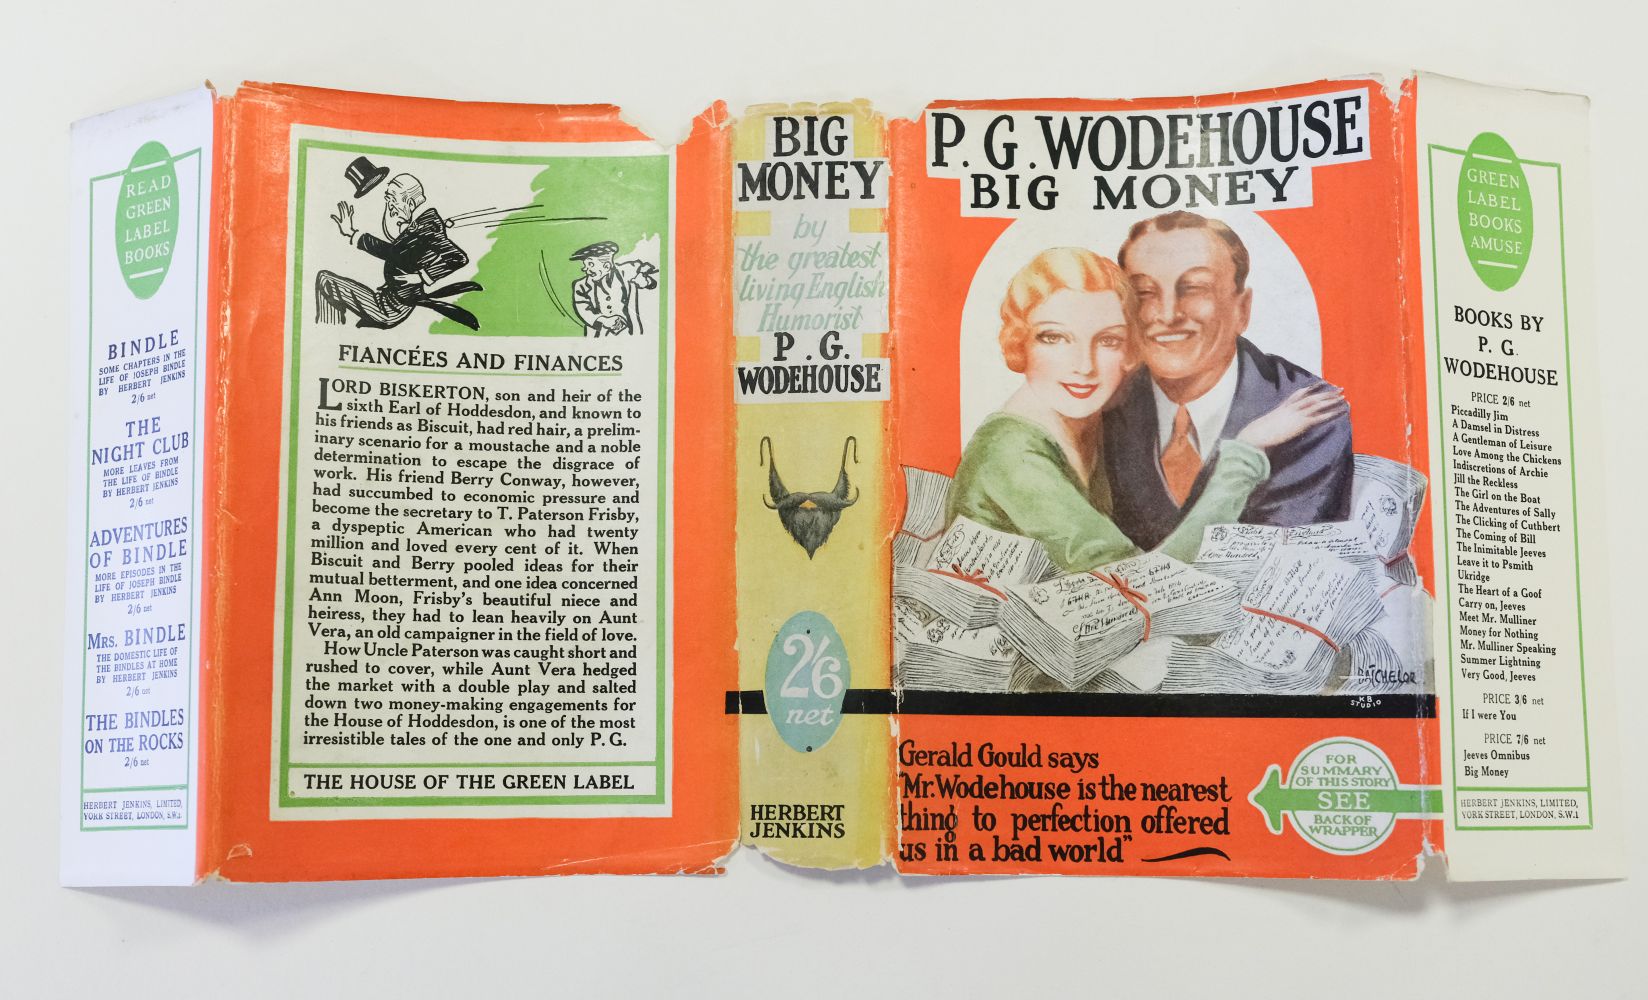 Wodehouse (P.G.) Big Money, 1st edition, 1931 - Image 2 of 15